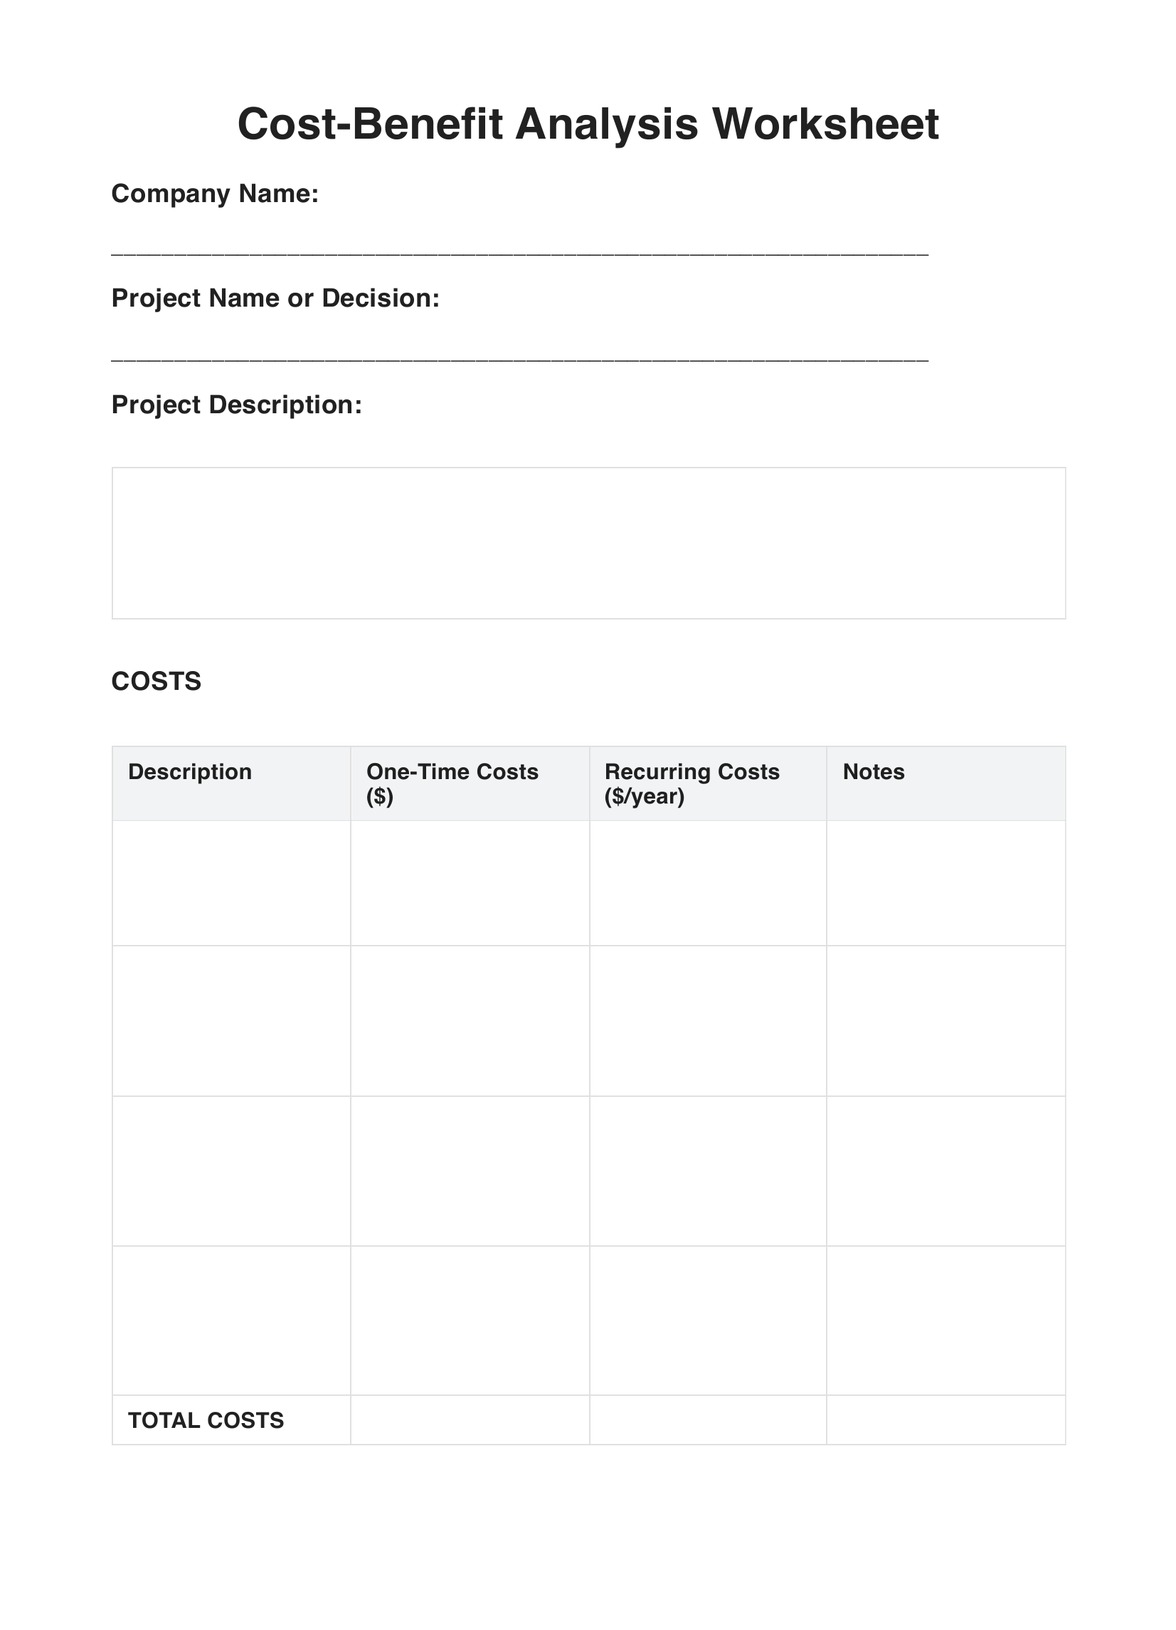 Cost Benefit Analysis Worksheet PDF Example